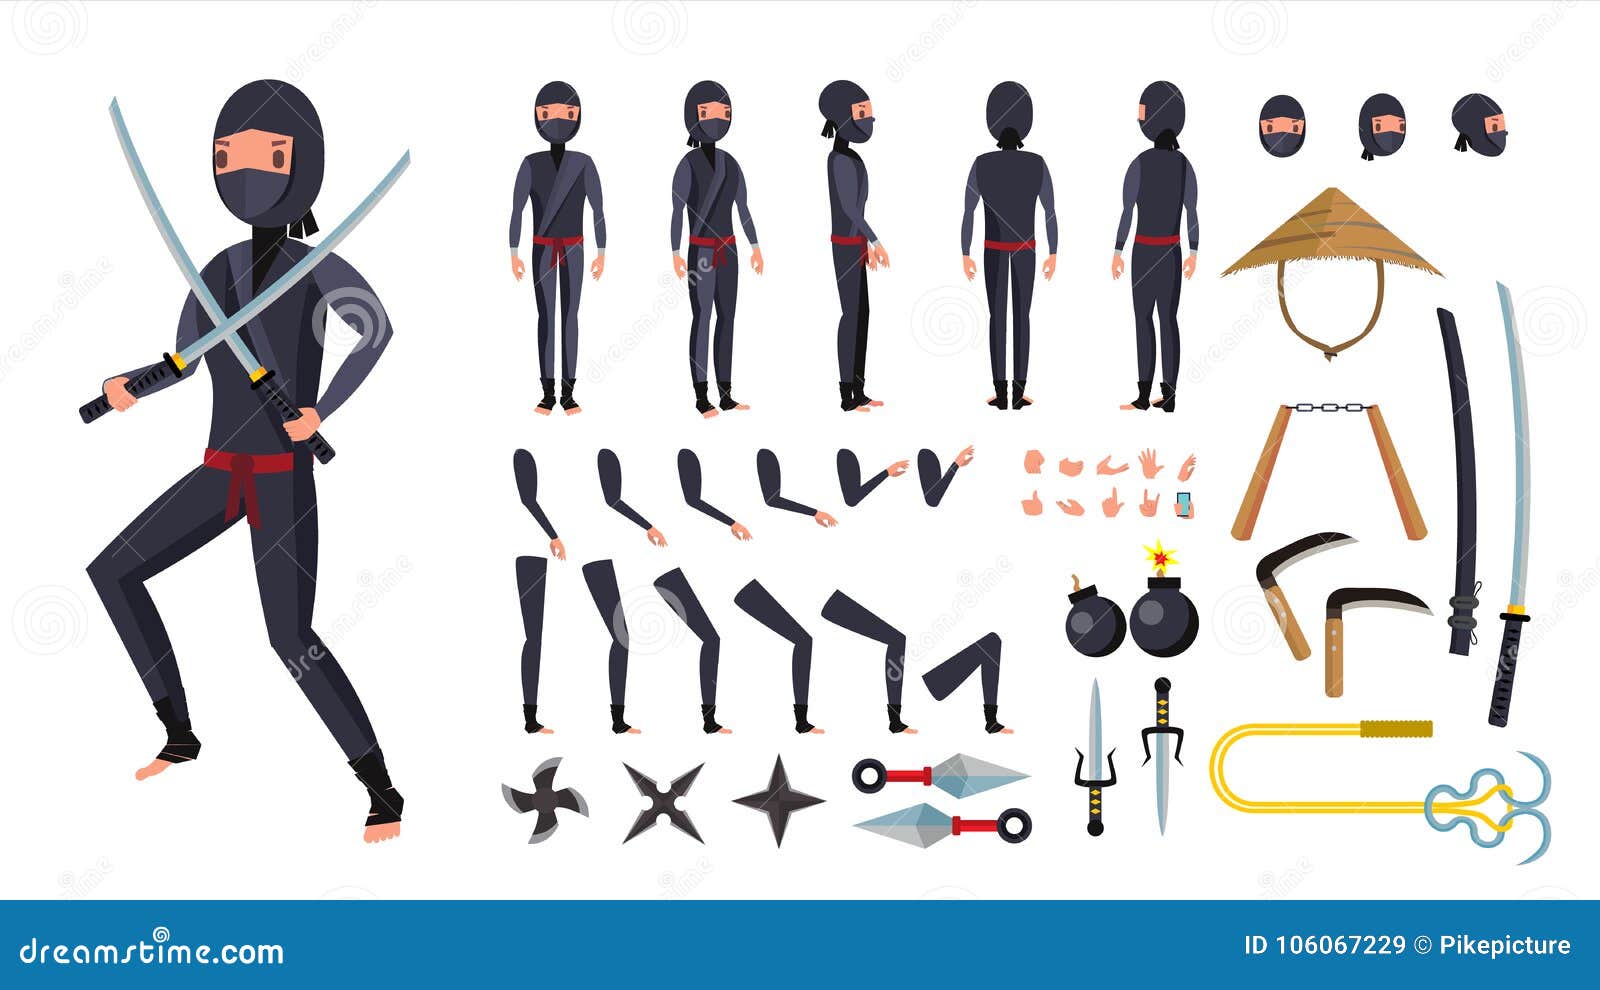 Ninja Vector Animated Character Creation Set Ninja Tools Stock